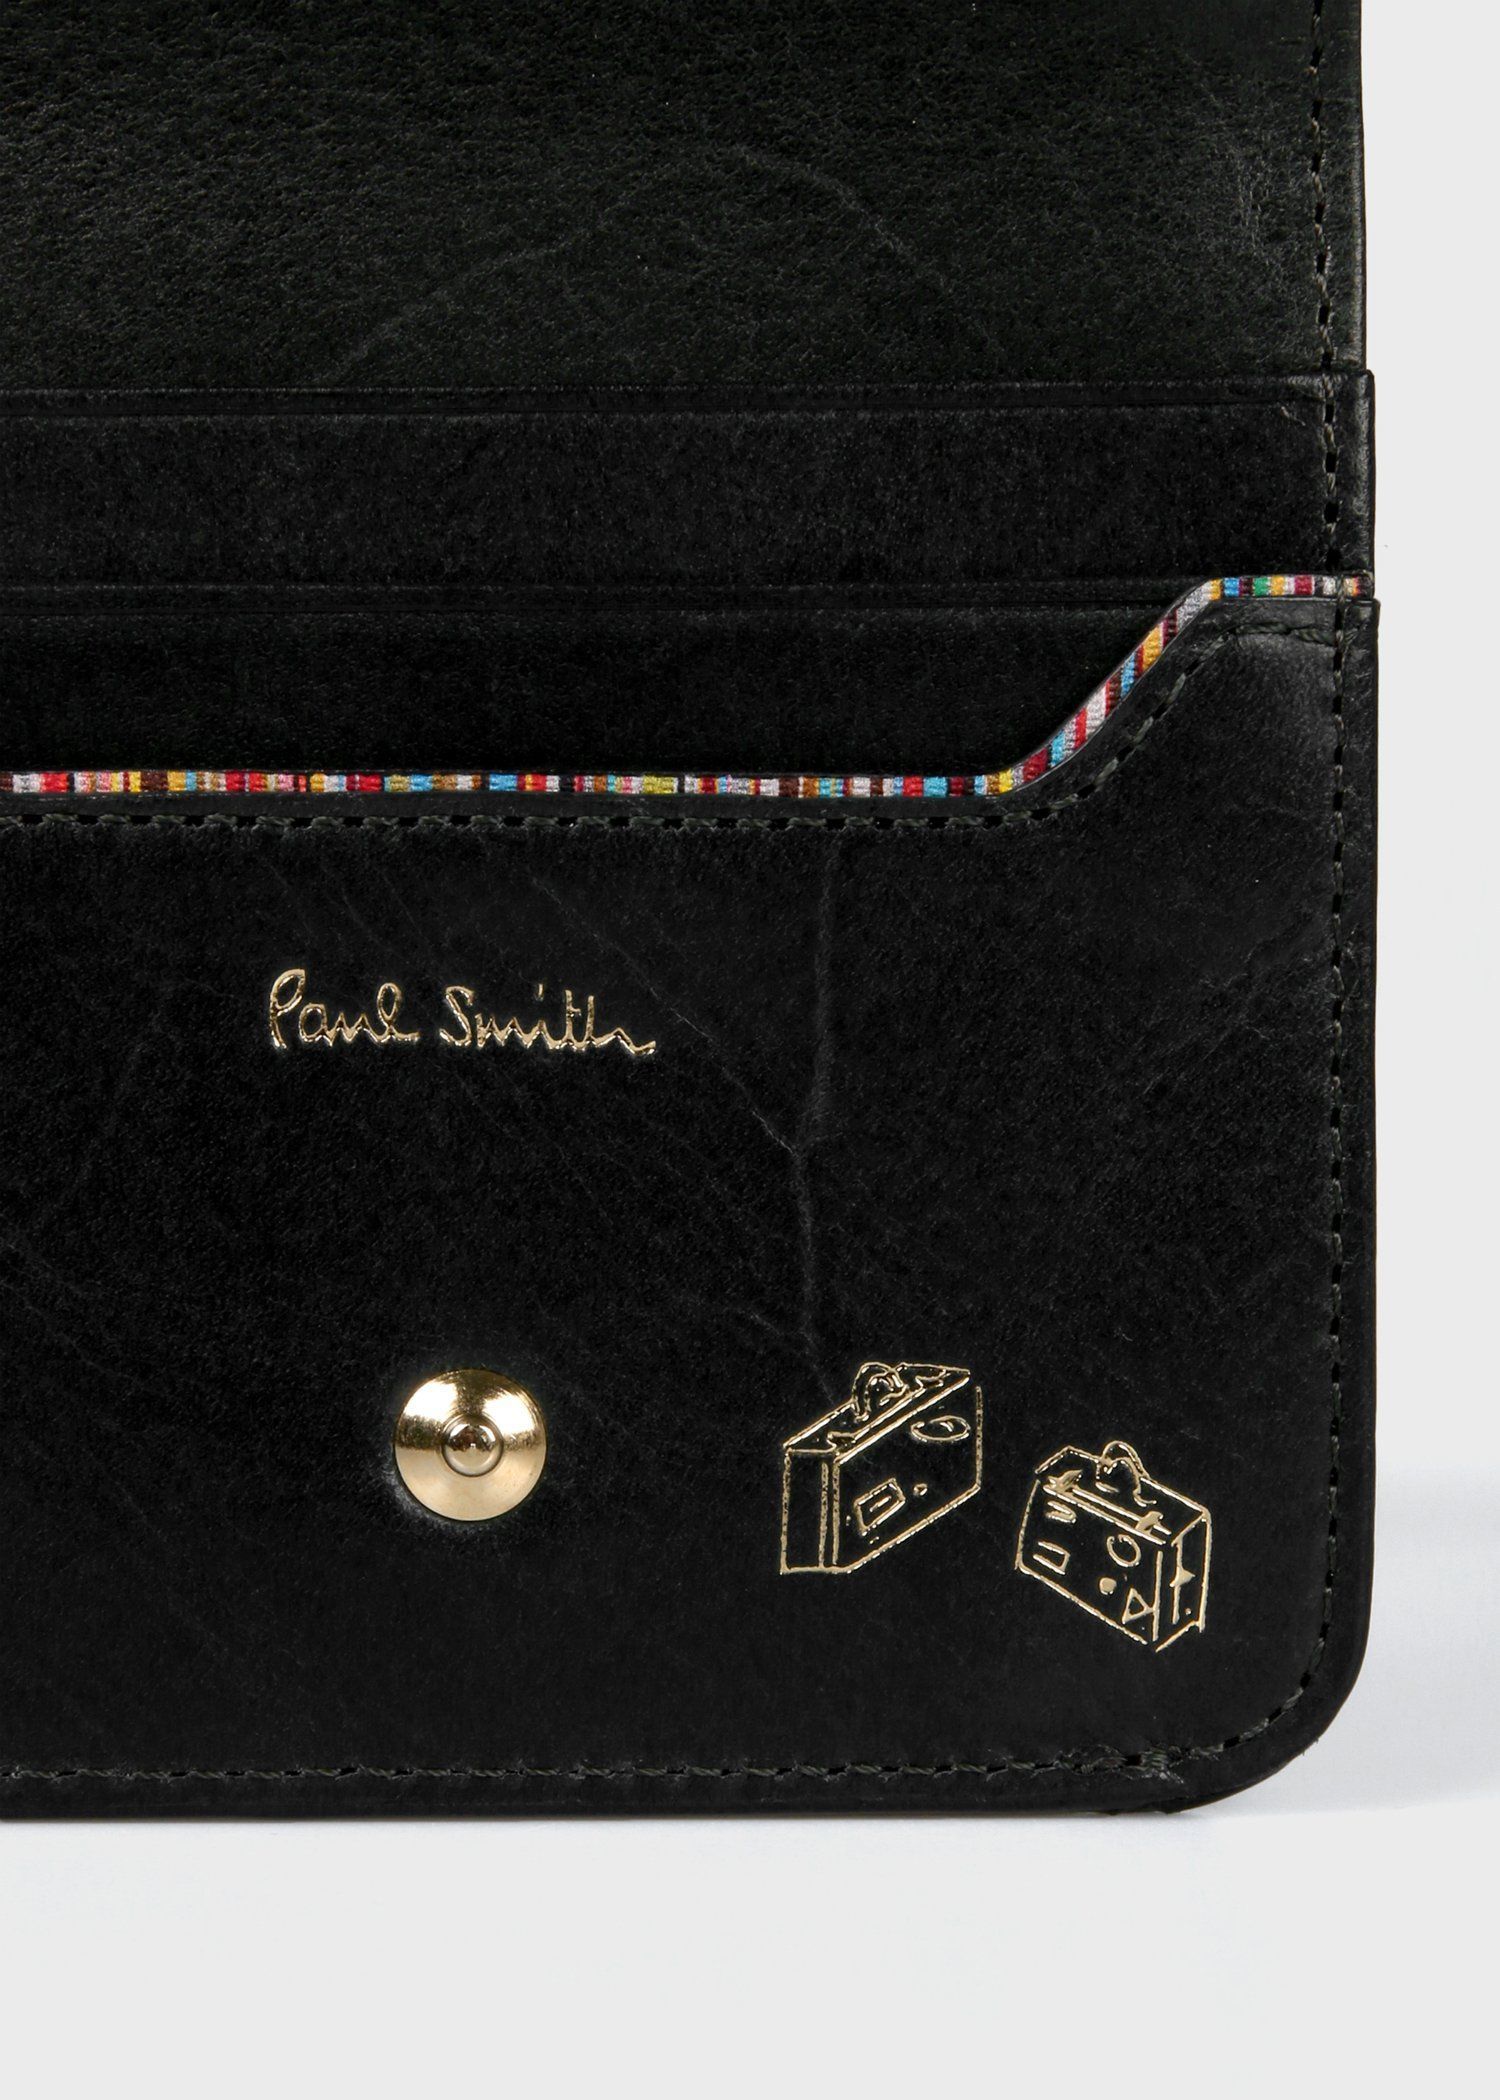 paulsmith財布未使用 美品 Paul Smith ポールスミス zipファスナー2つ折り財布